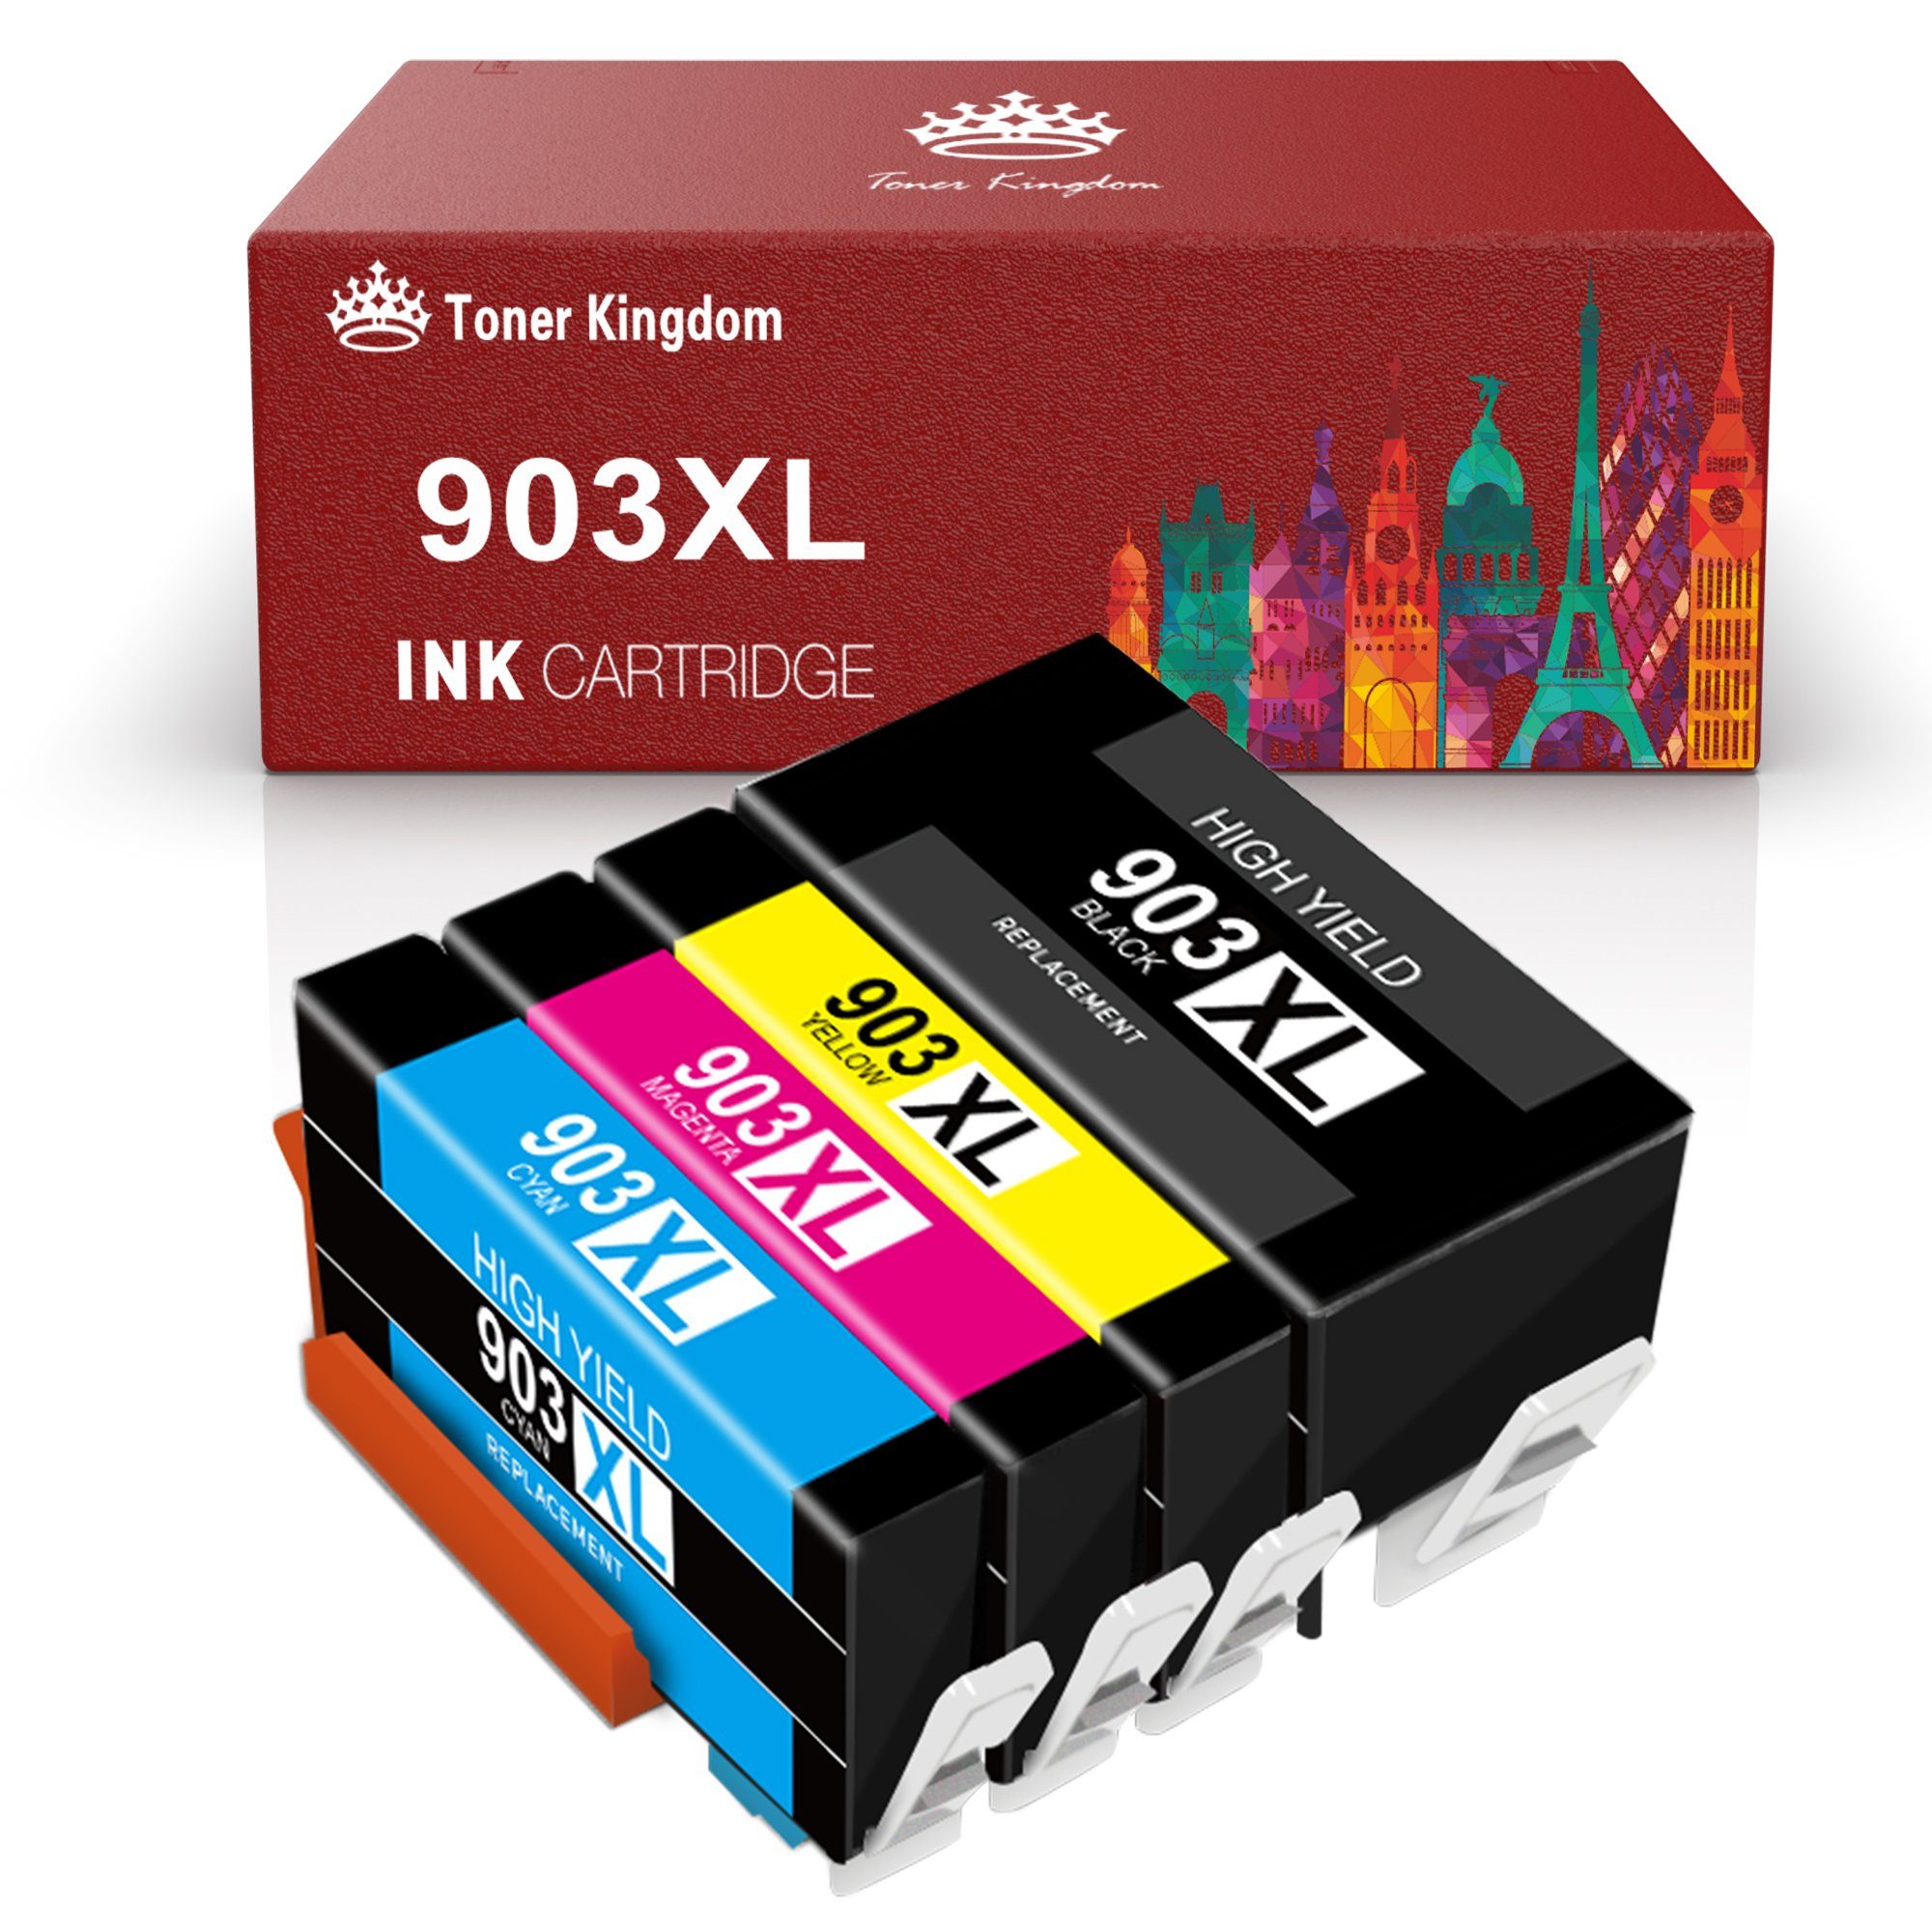 Toner Kingdom 903XL Kompatibel für HP 903 XL 6950 6970 6960 Tintenpatrone